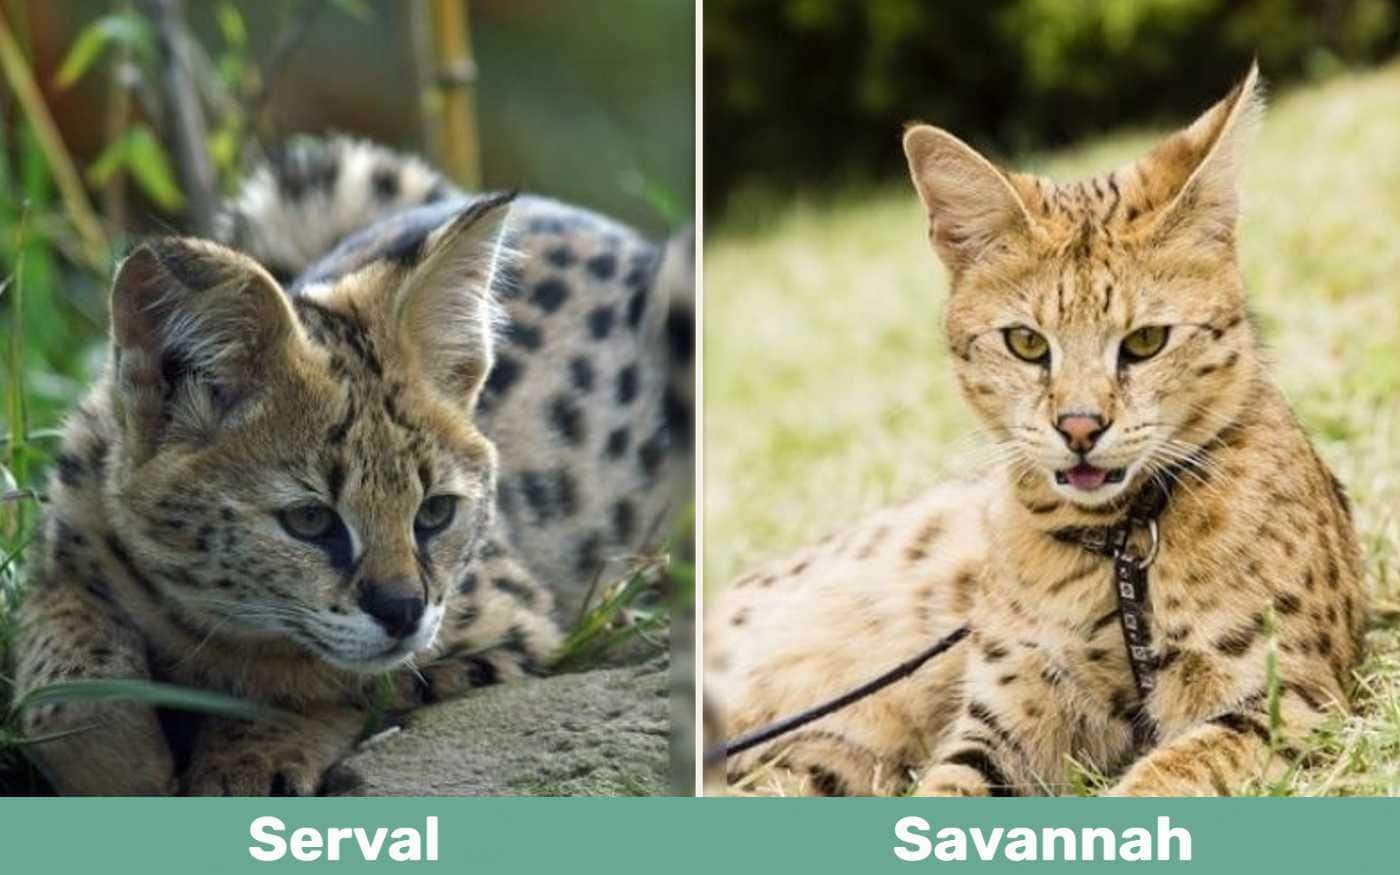 Serval vs Savannah cat